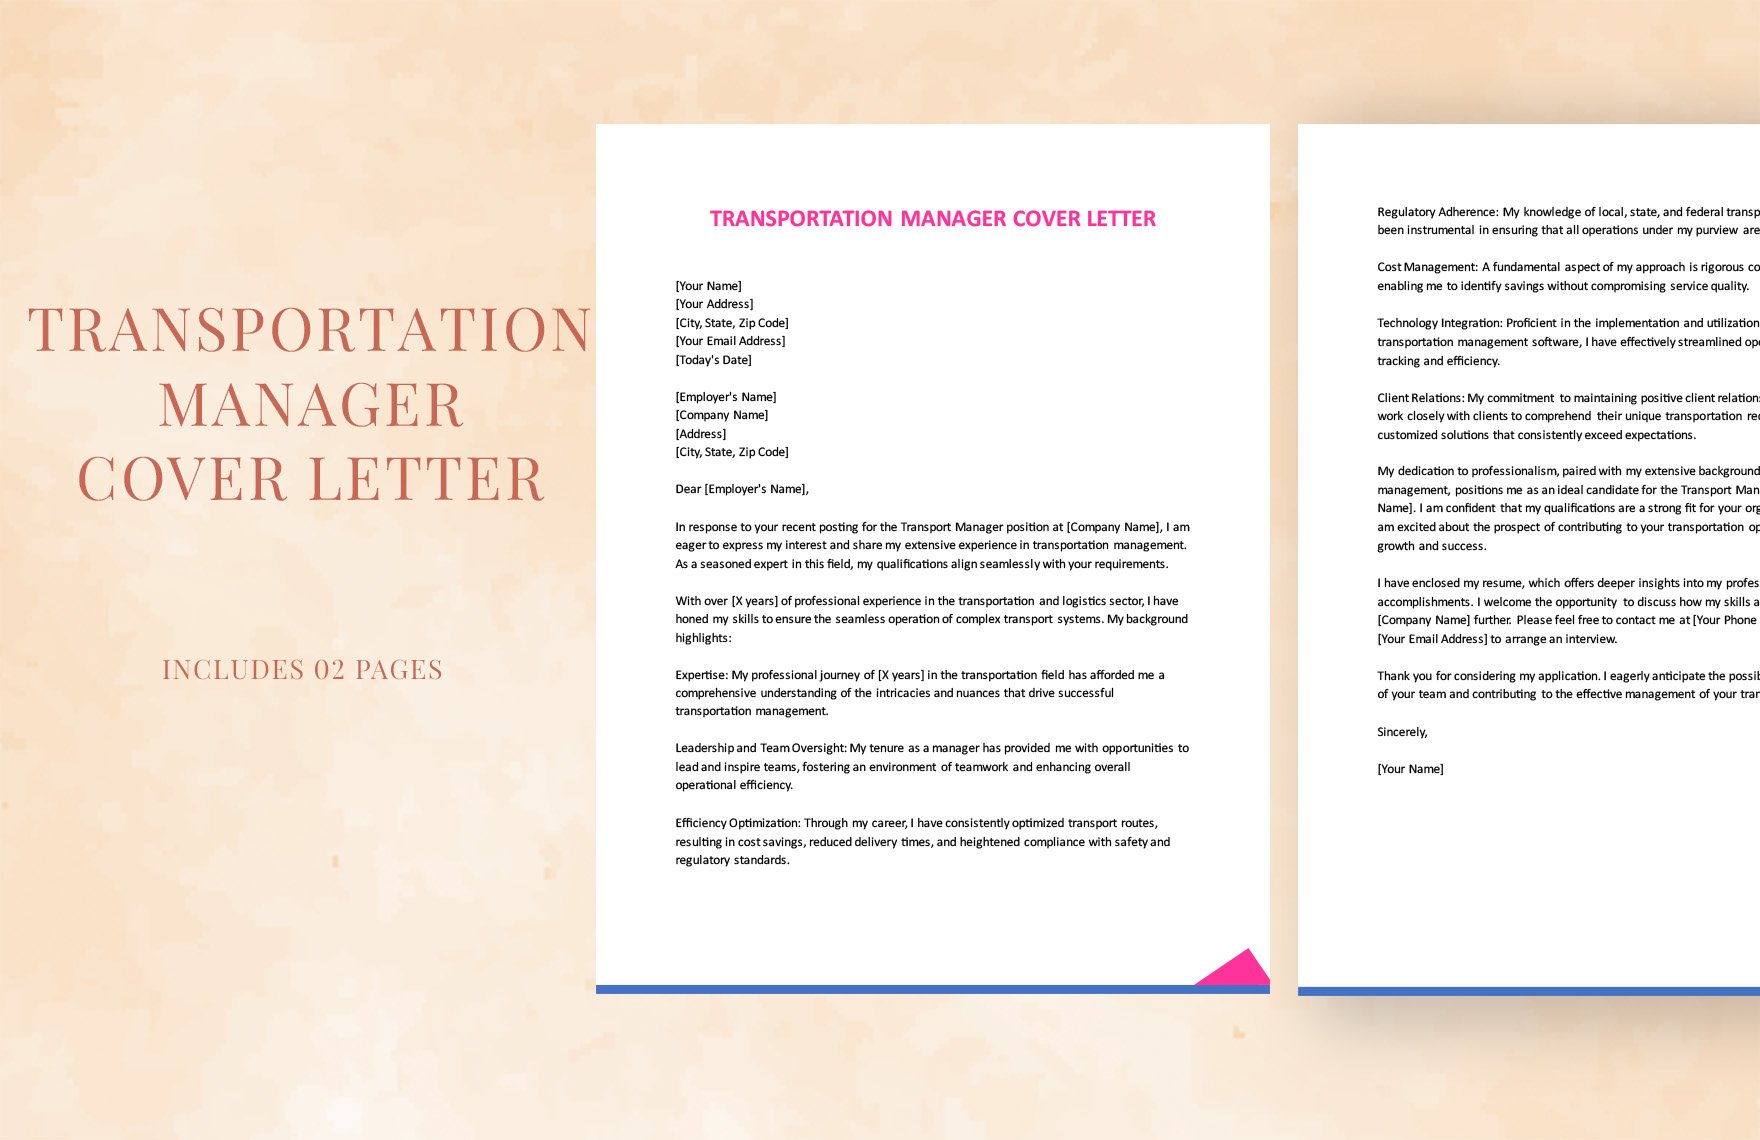 Transport Manager Cover Letter in Word, Google Docs, PDF